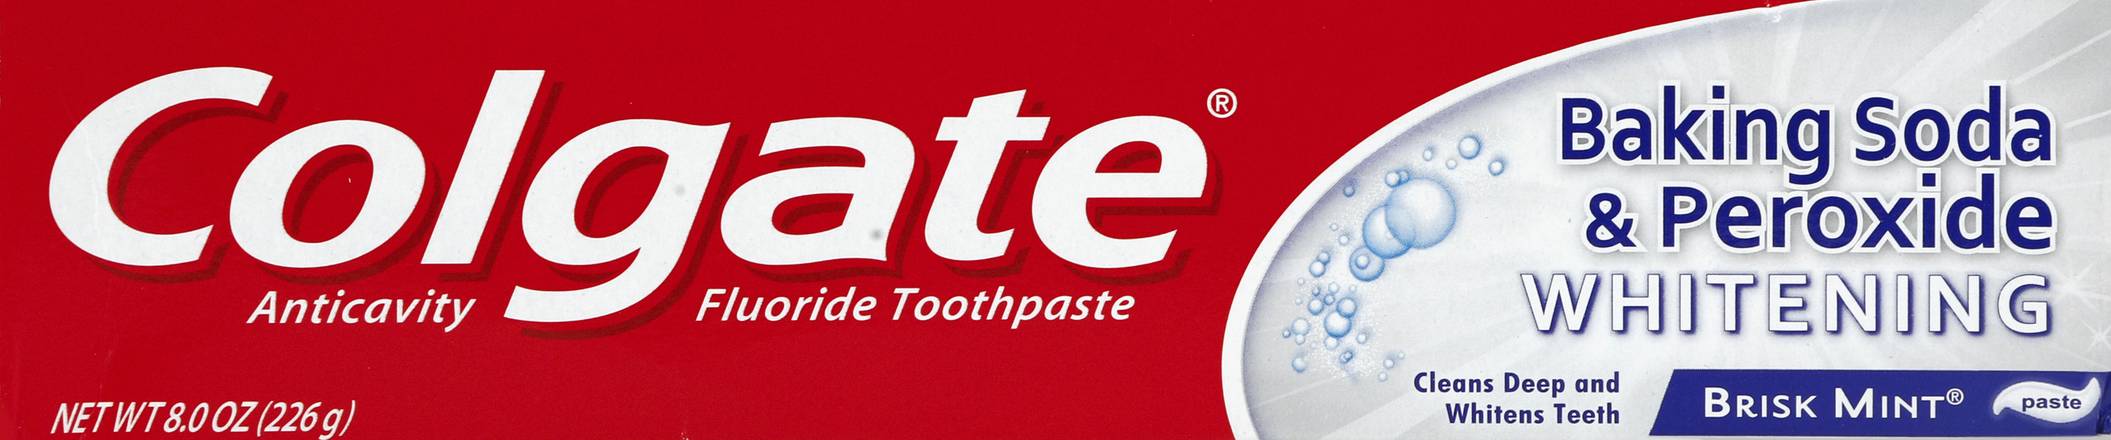 Colgate Baking Soda & Peroxide Whitening Brisk Mint Toothpaste